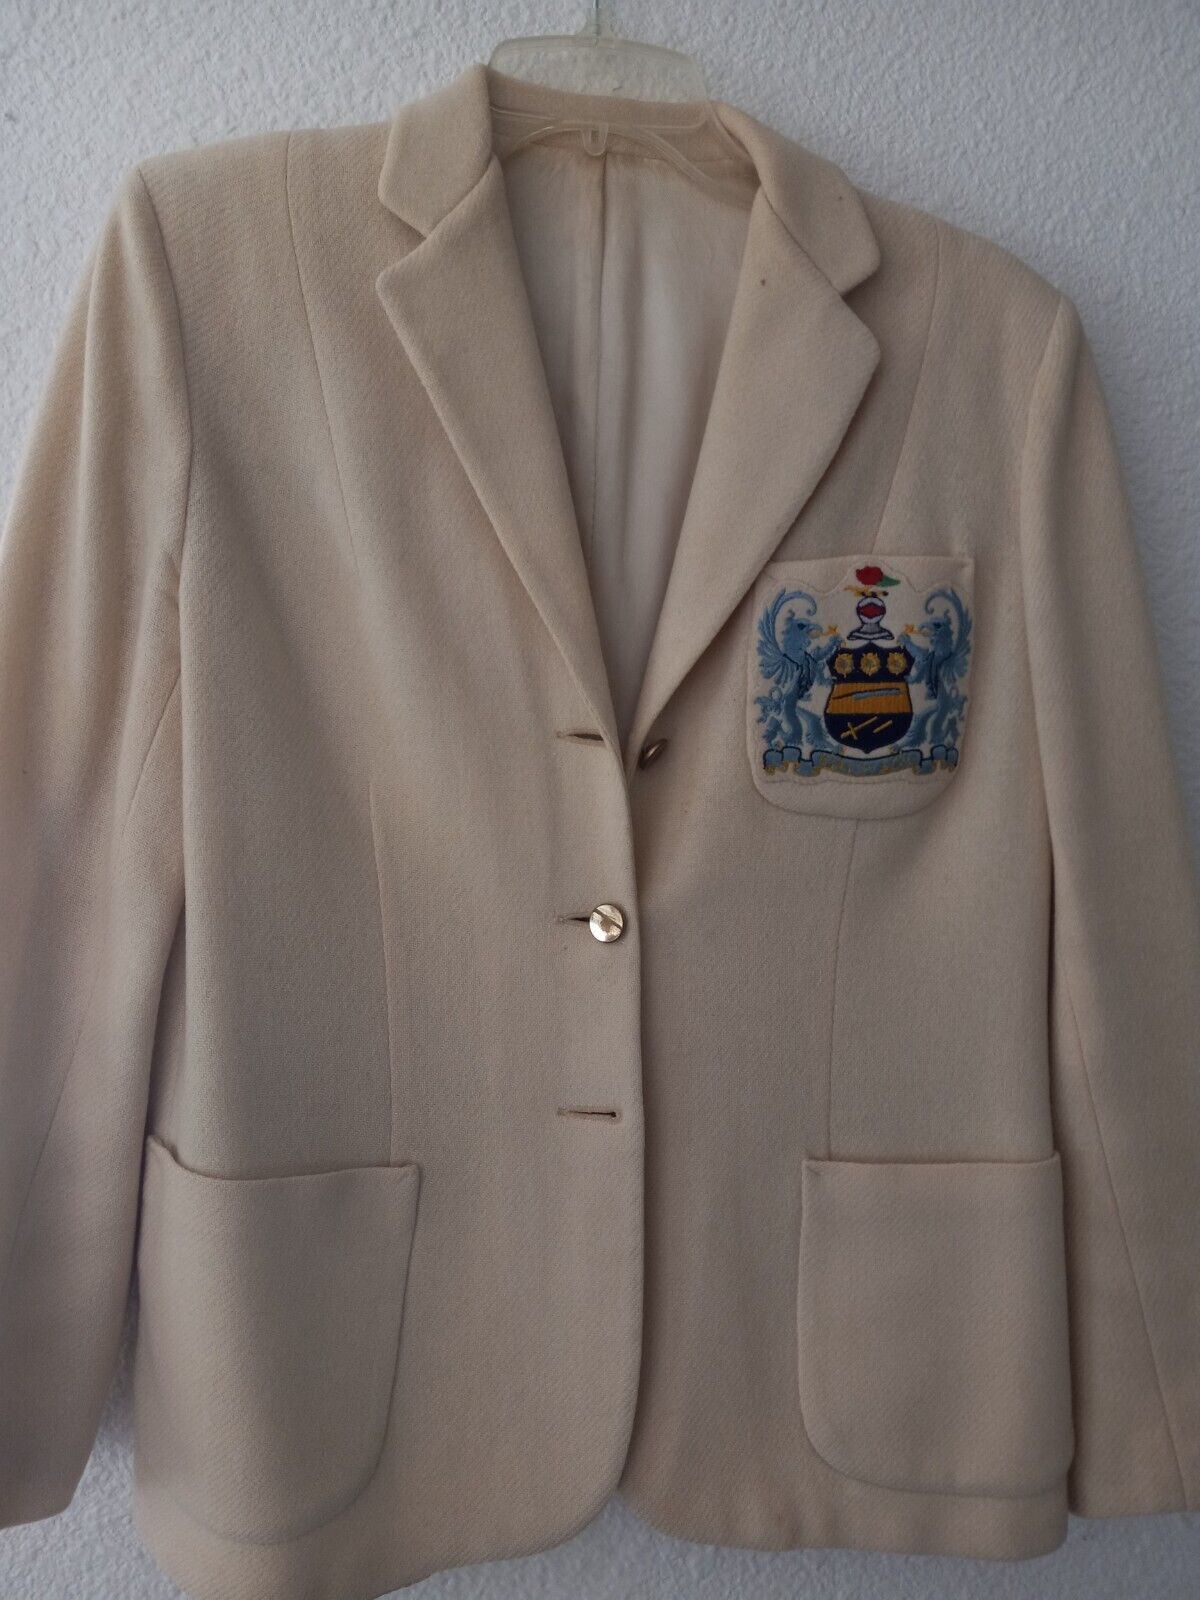 Rare Letterman Jacket Coat Hand Sewn Lions Knight Patch Sorority Handmade Maybe